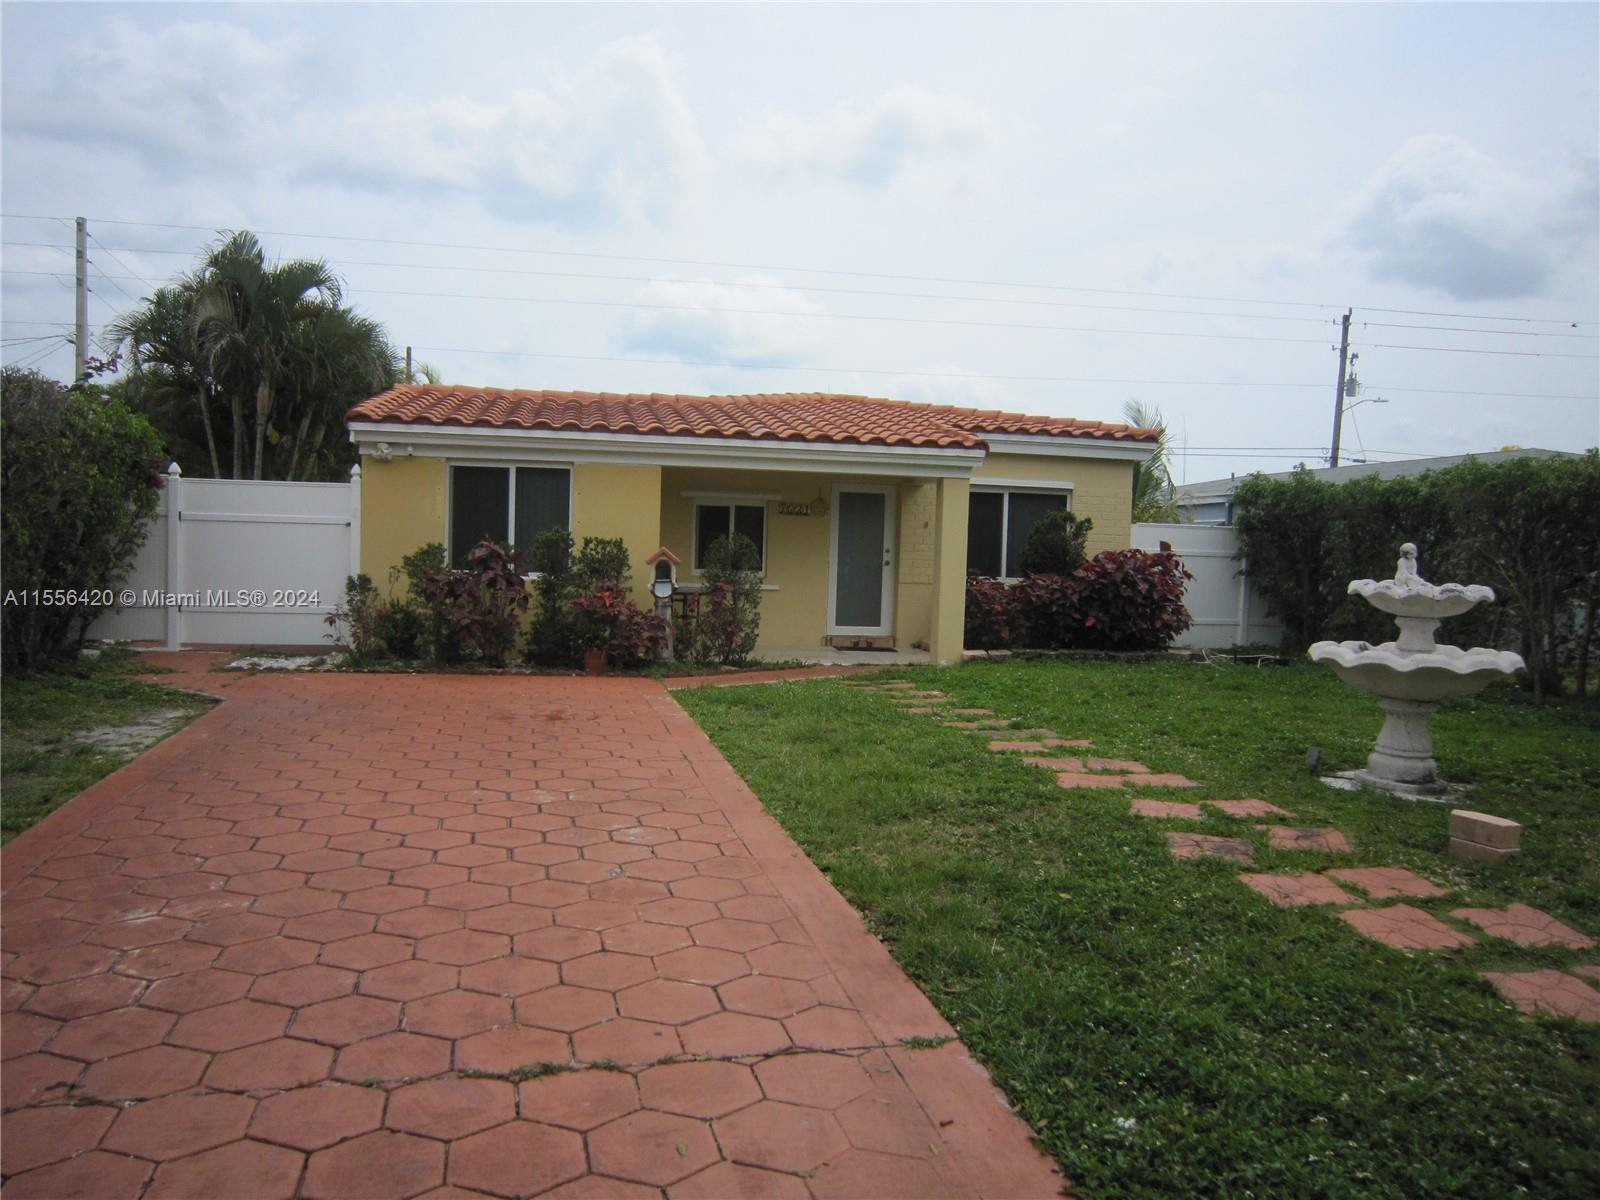 Property for Sale at 17031 Ne 18th Ave, North Miami Beach, Miami-Dade County, Florida - Bedrooms: 4 
Bathrooms: 3  - $650,000